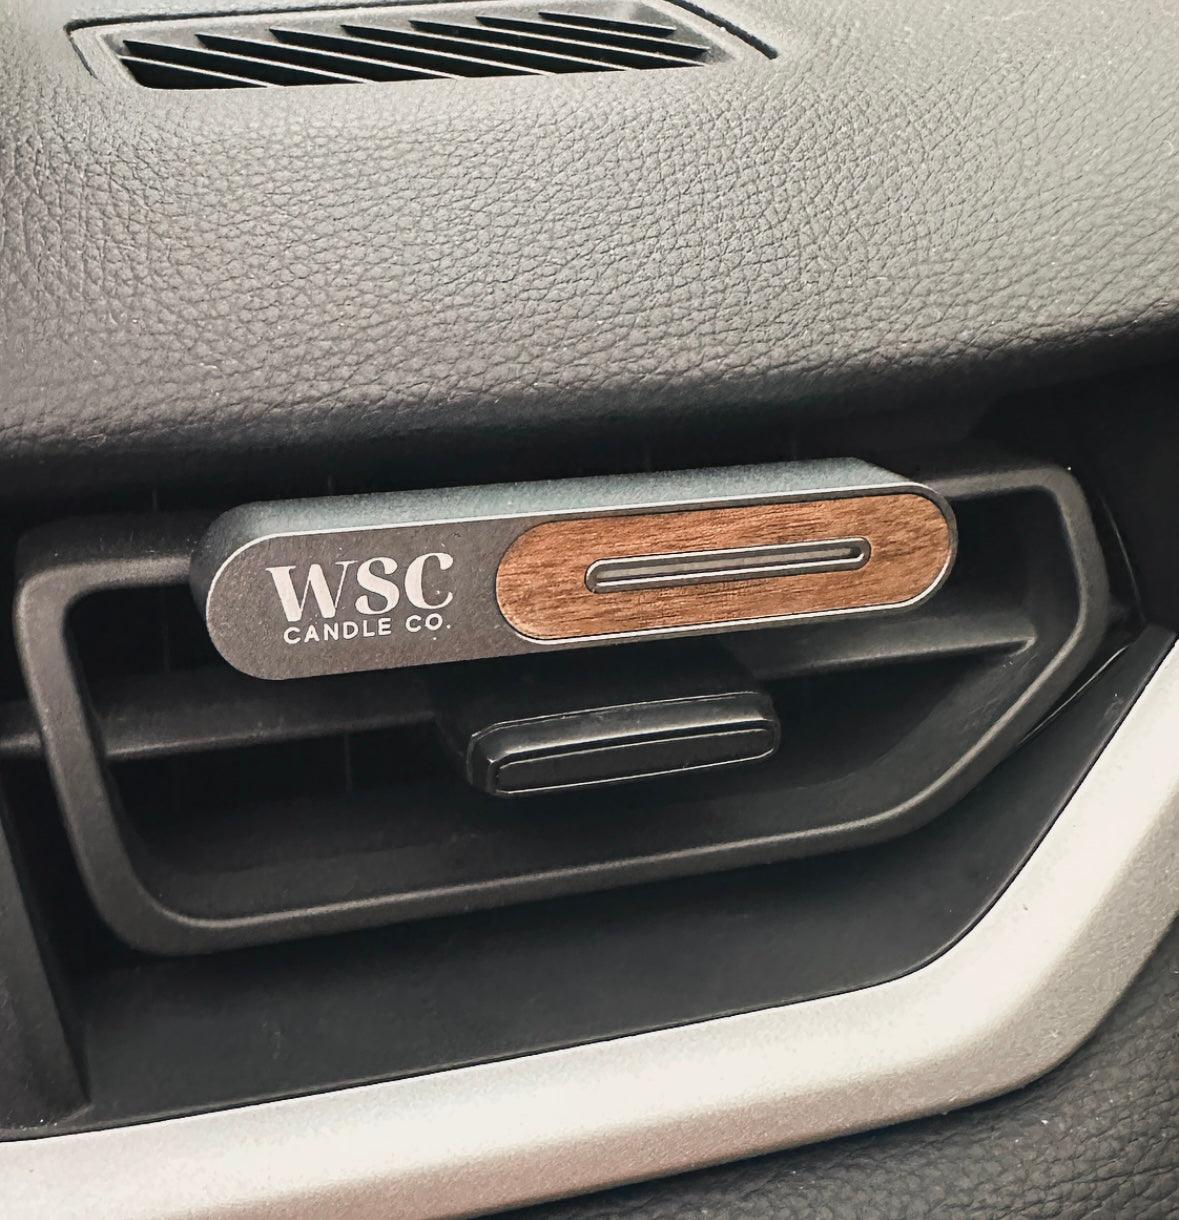 WSC Car Diffuser – WSC Candle Co